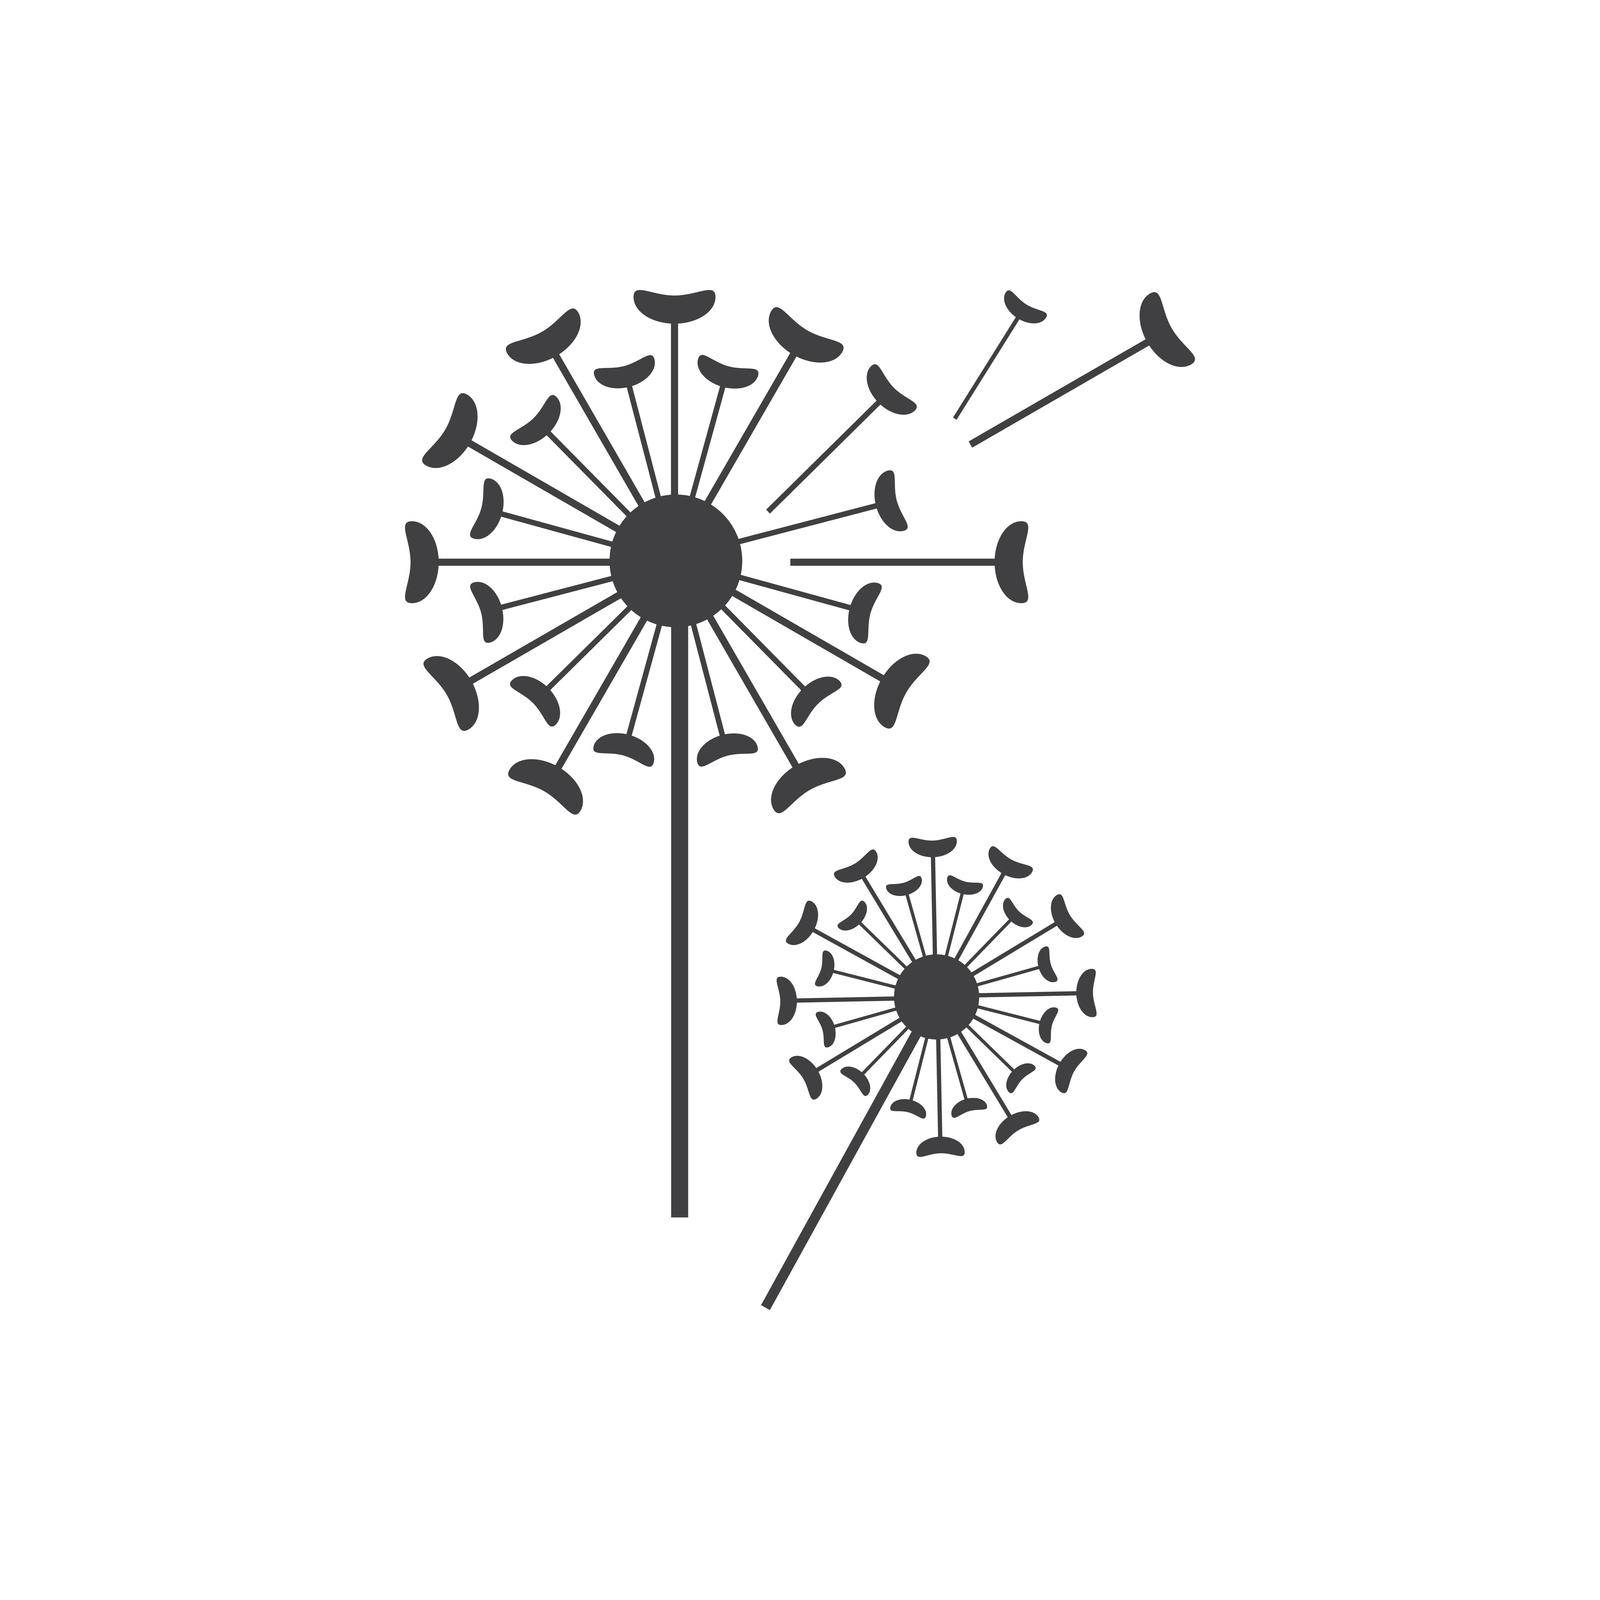 Dandelion logo images illustration by Attades19